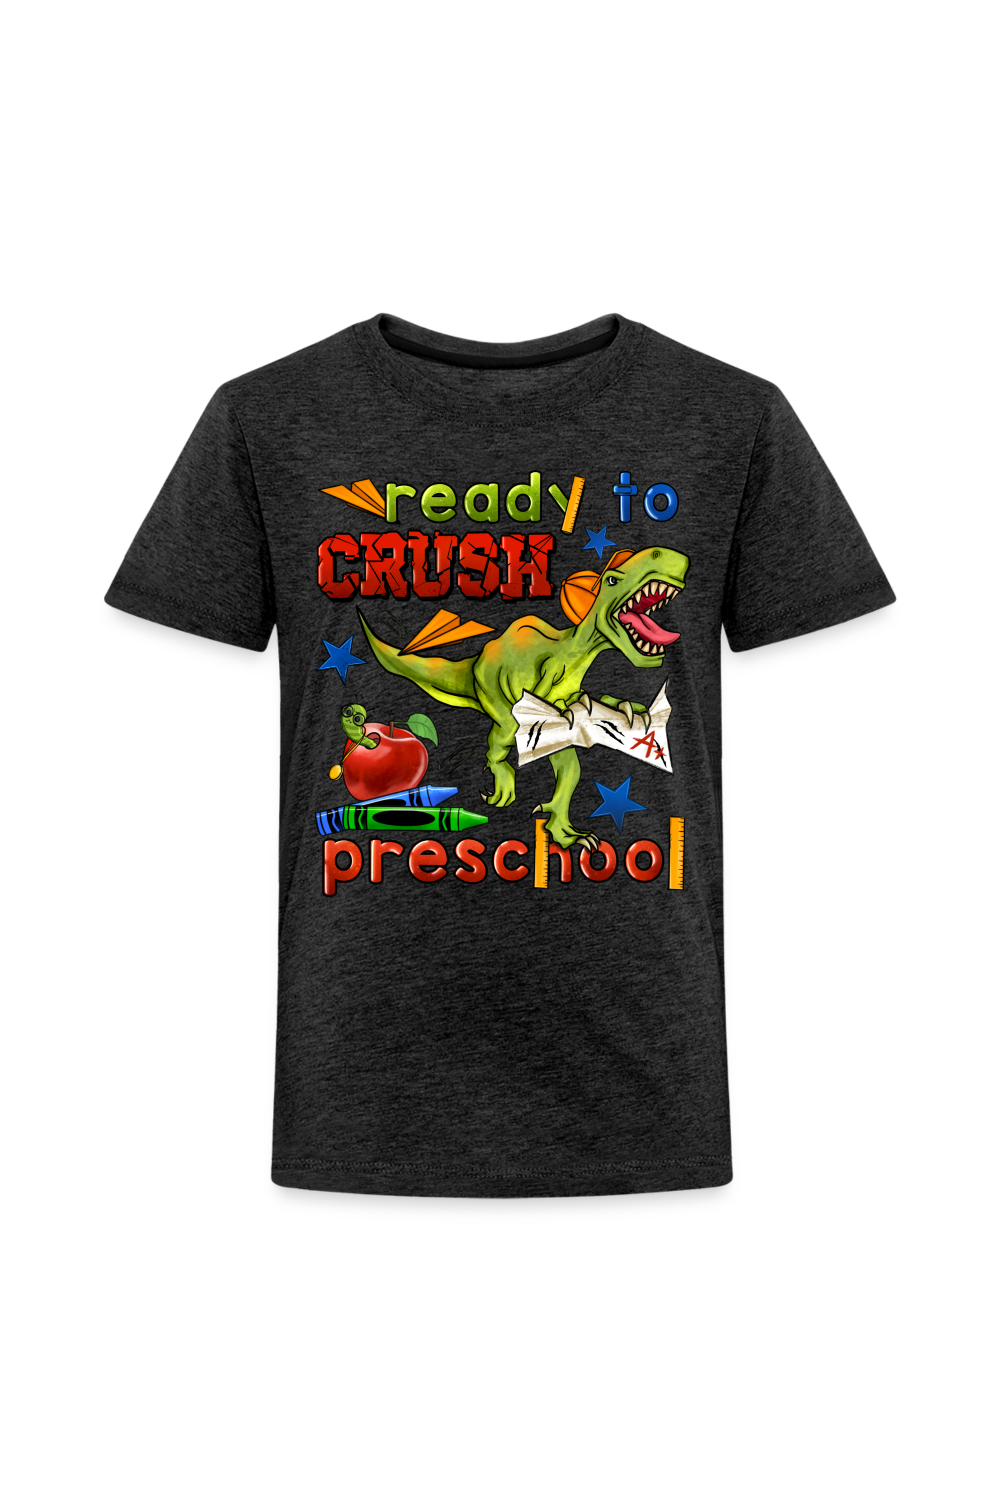 Toddler Boys Ready To Crush Preschool Short Sleeve Tee Shirt for Back To School - charcoal grey